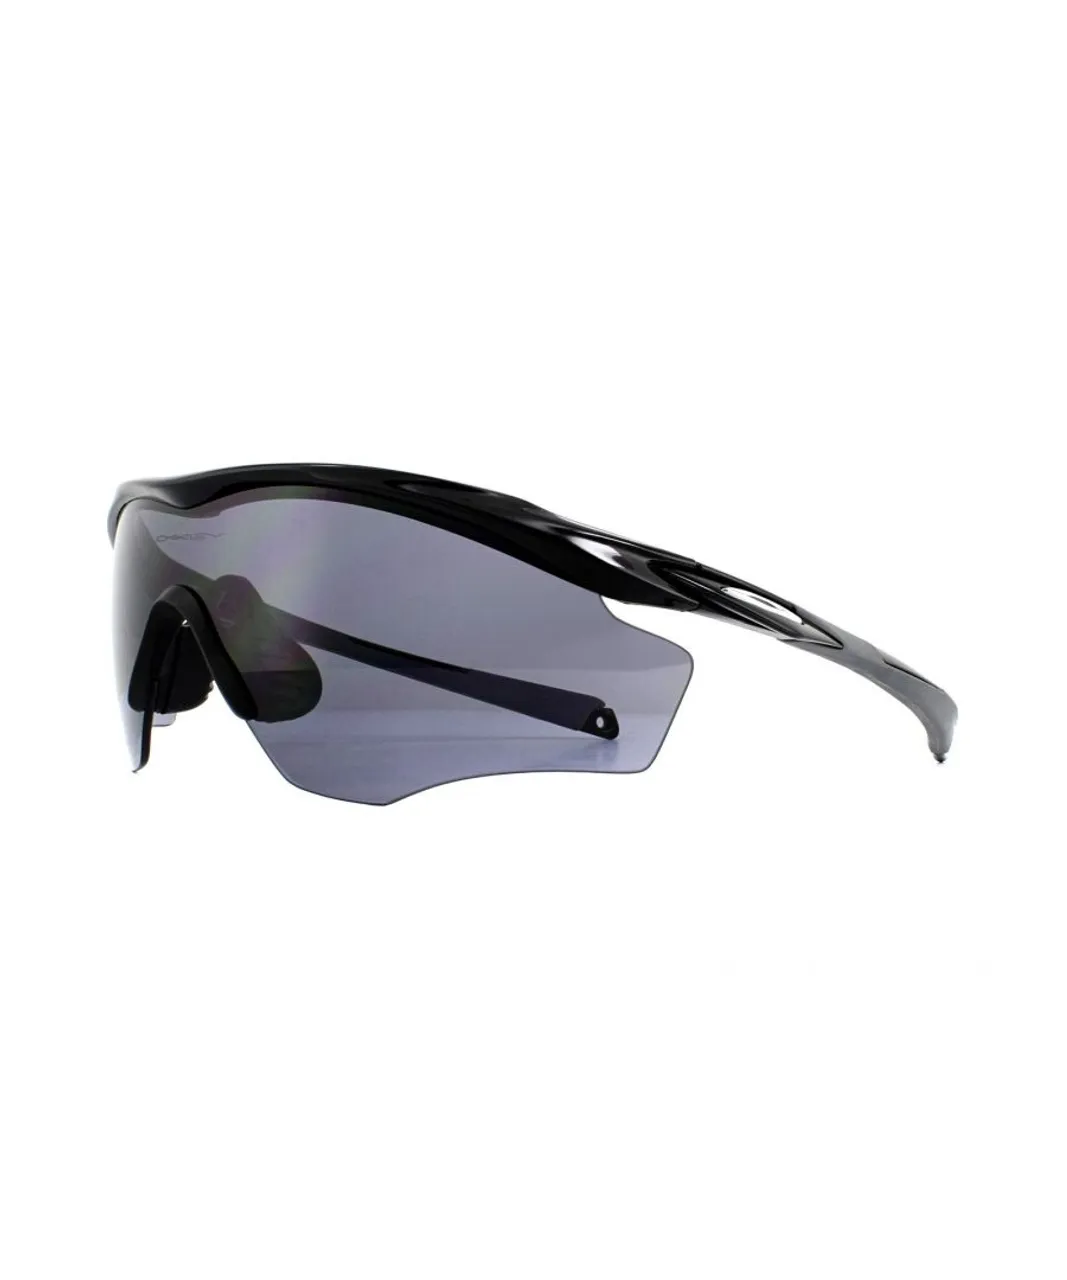 Oakley Mens Sunglasses M2 Frame XL OO9343-01 Polished Black Grey - One